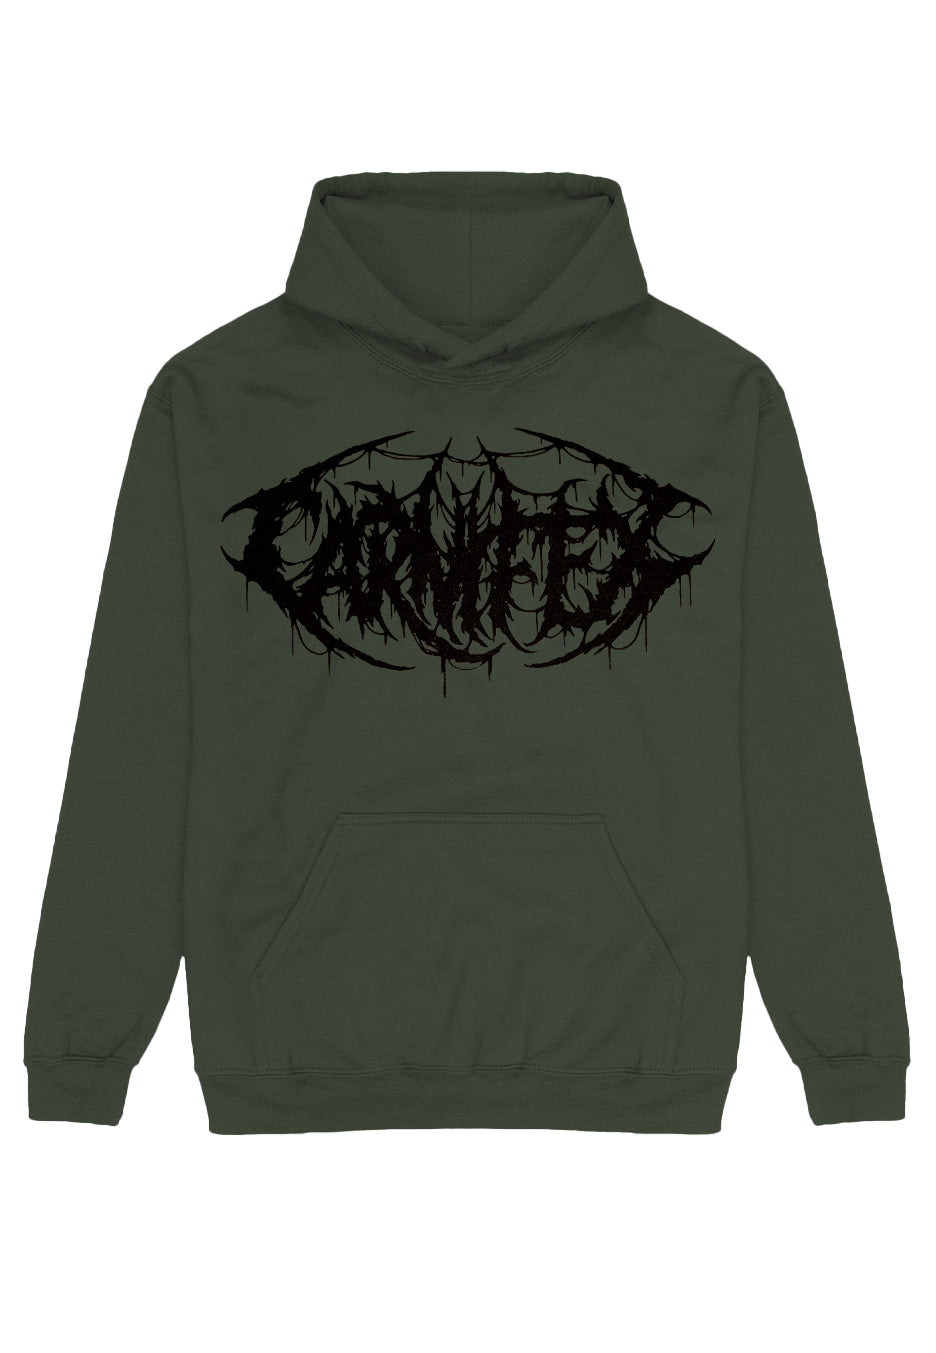 Carnifex - Defend Death Metal Military Green - Hoodie